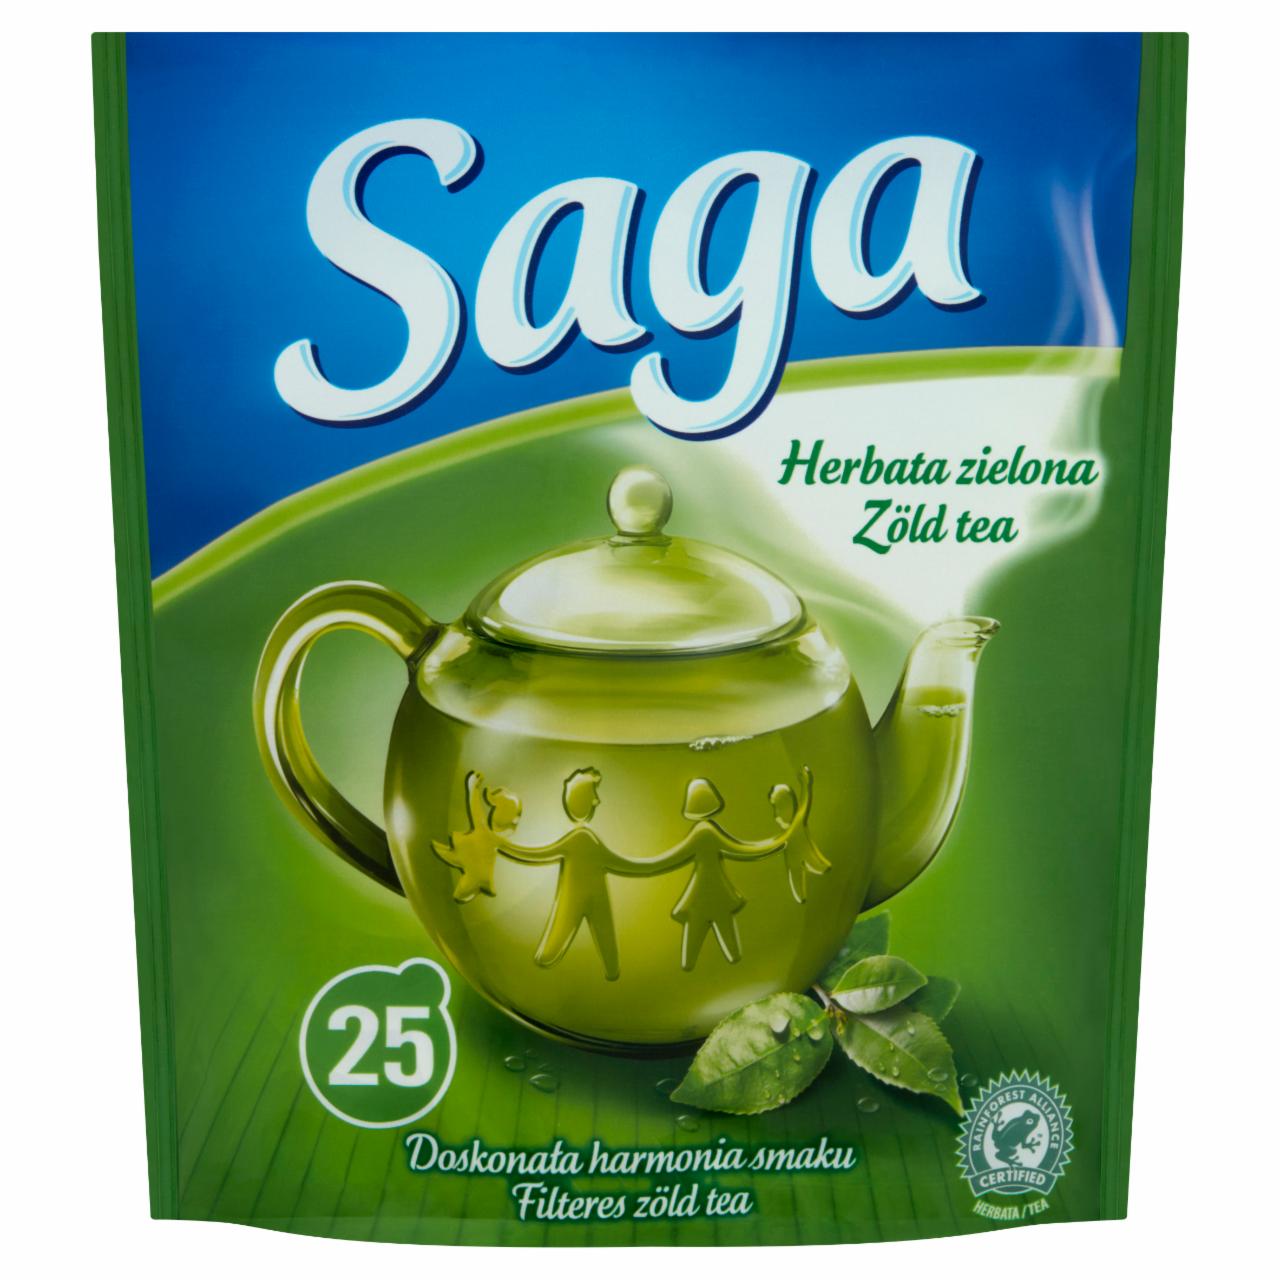 Képek - Saga filteres zöld tea 25 filter 32,5 g